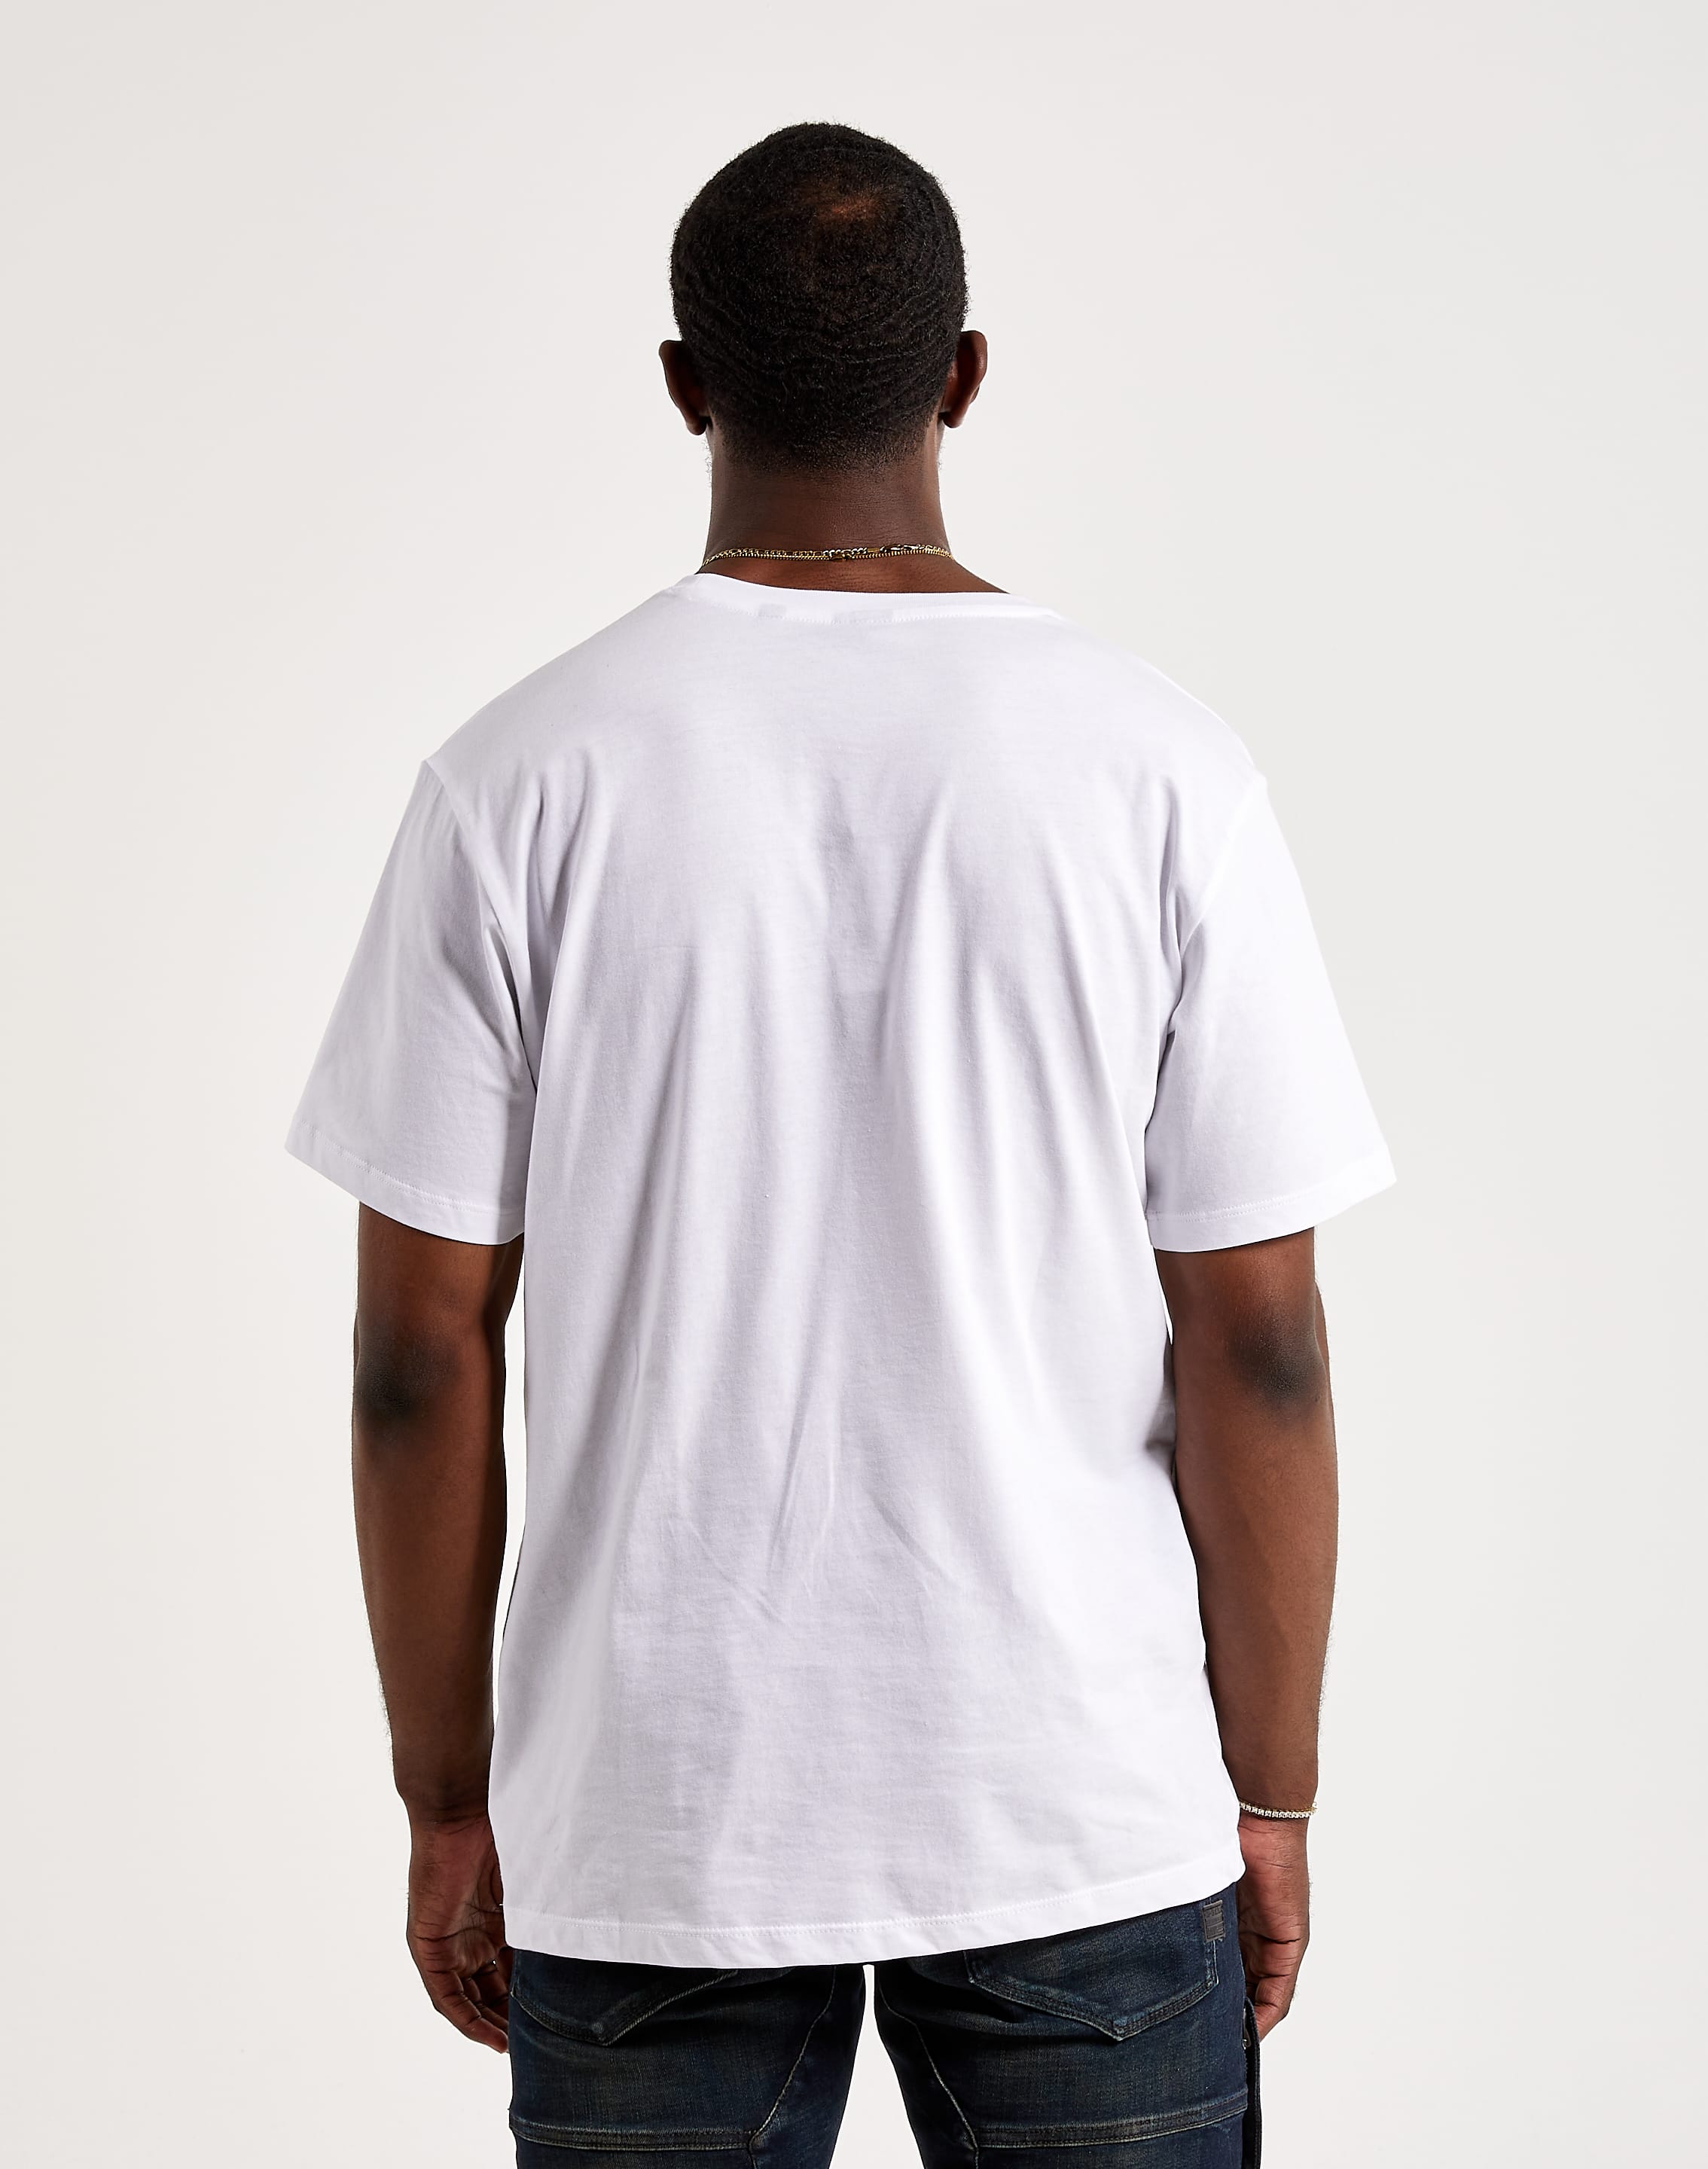 G-Star Basic T-Shirt (White with Acid Orange Logo)